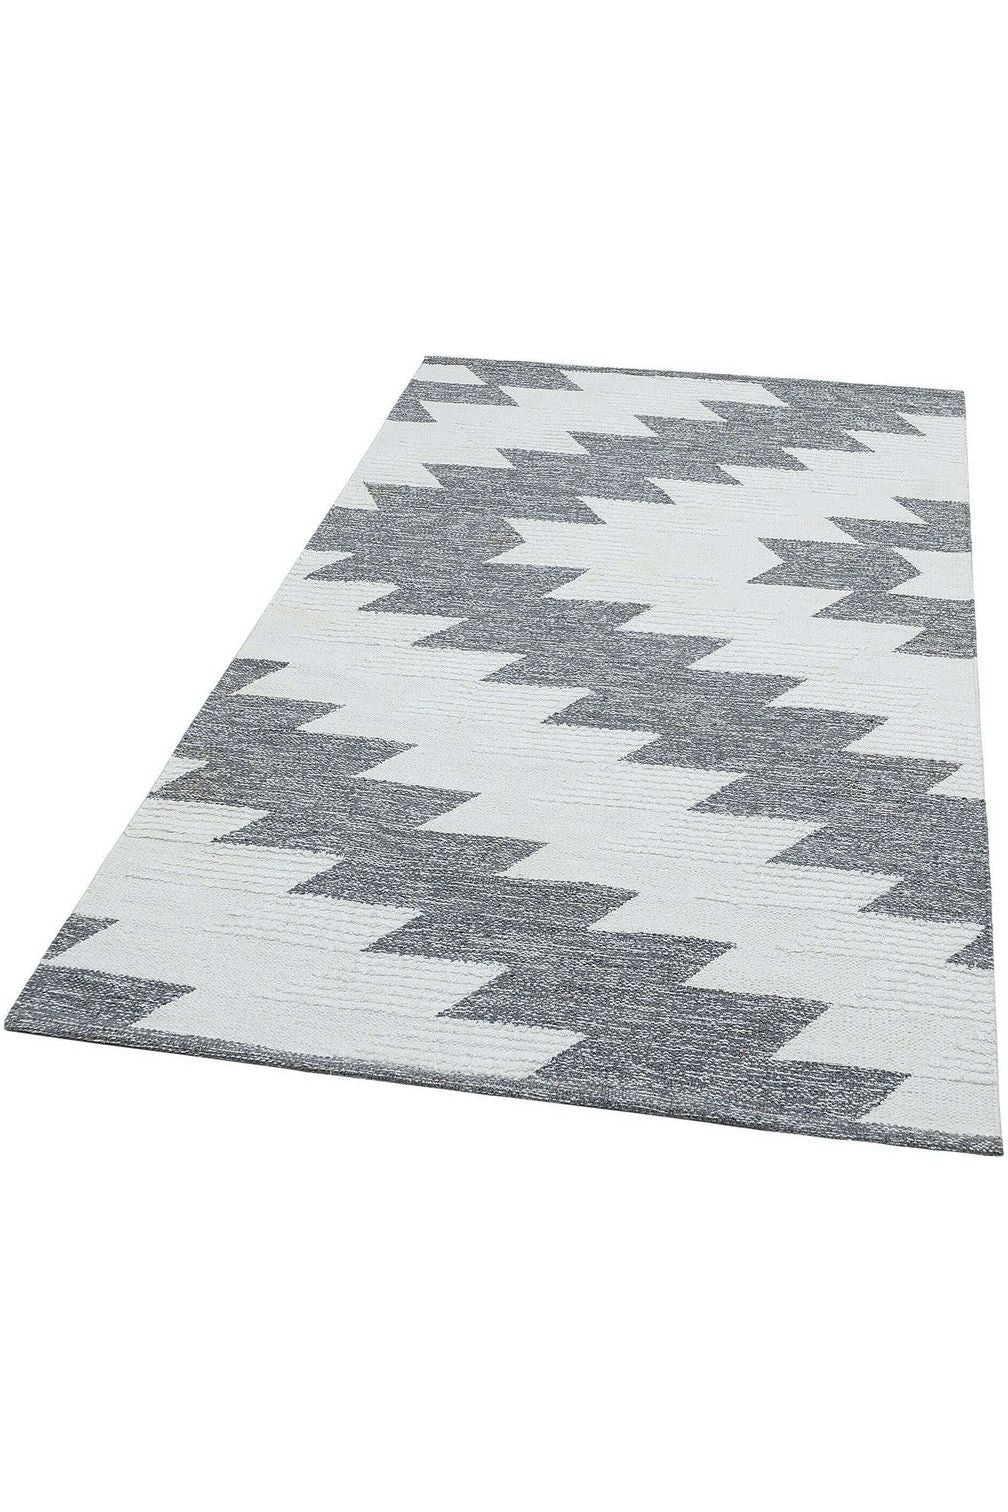 #Turkish_Carpets_Rugs# #Modern_Carpets# #Abrash_Carpets#Afr 02 Silver White